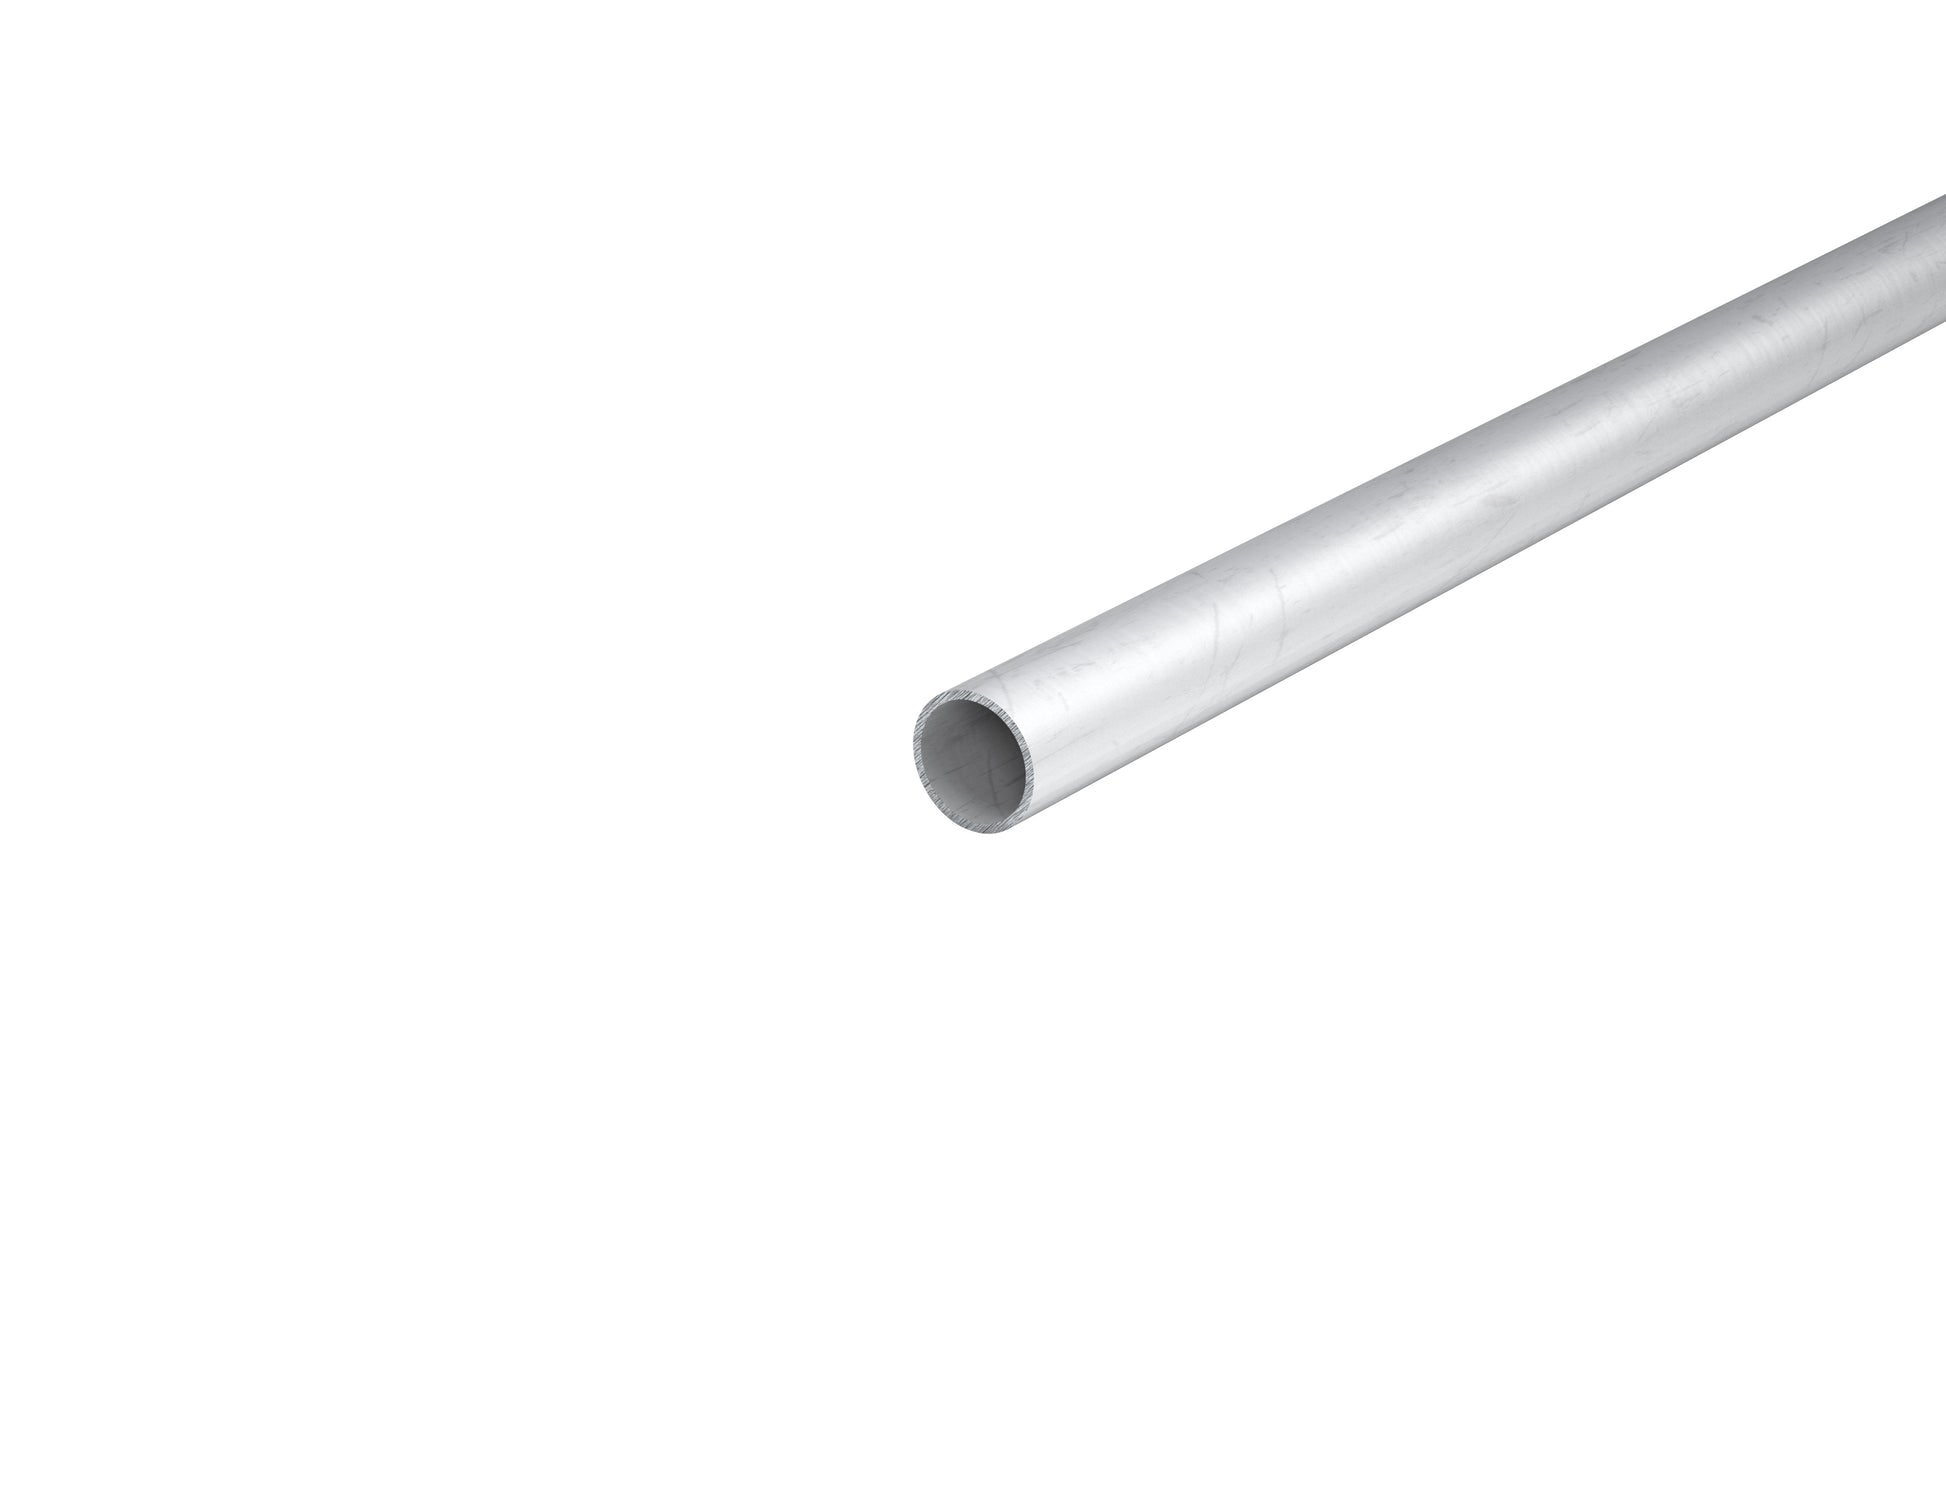 7/8" OD .058" wall round aluminum tube, 16 gauge 7/8" aluminum tube, 6063-T832 drawn .058" wall, 0.875" OD